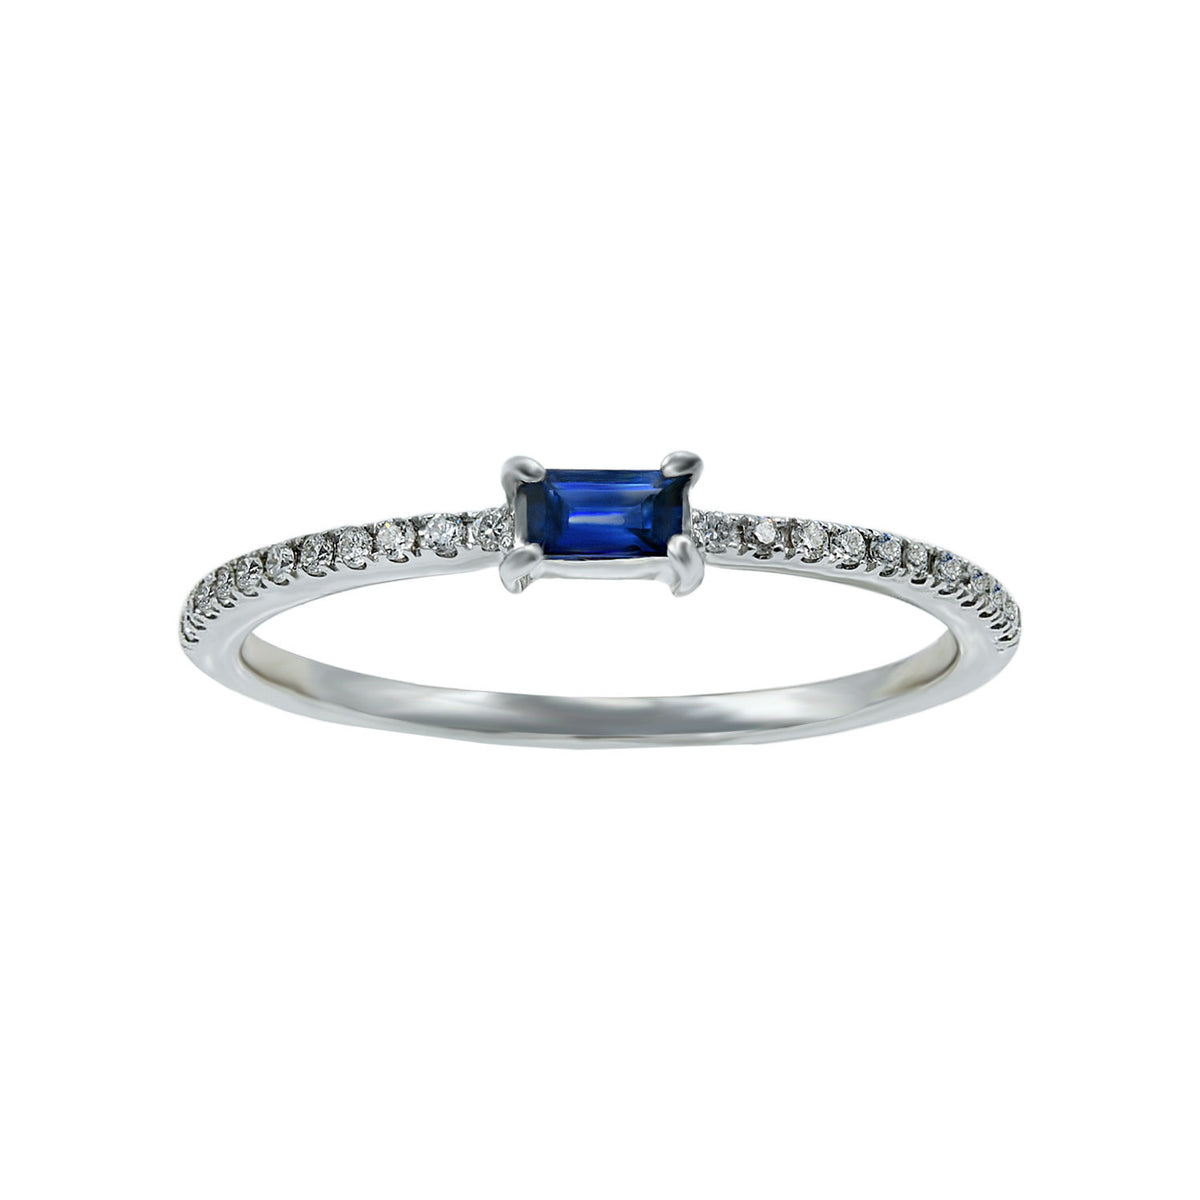 Sapphire ring. Diamond and sapphire ring.